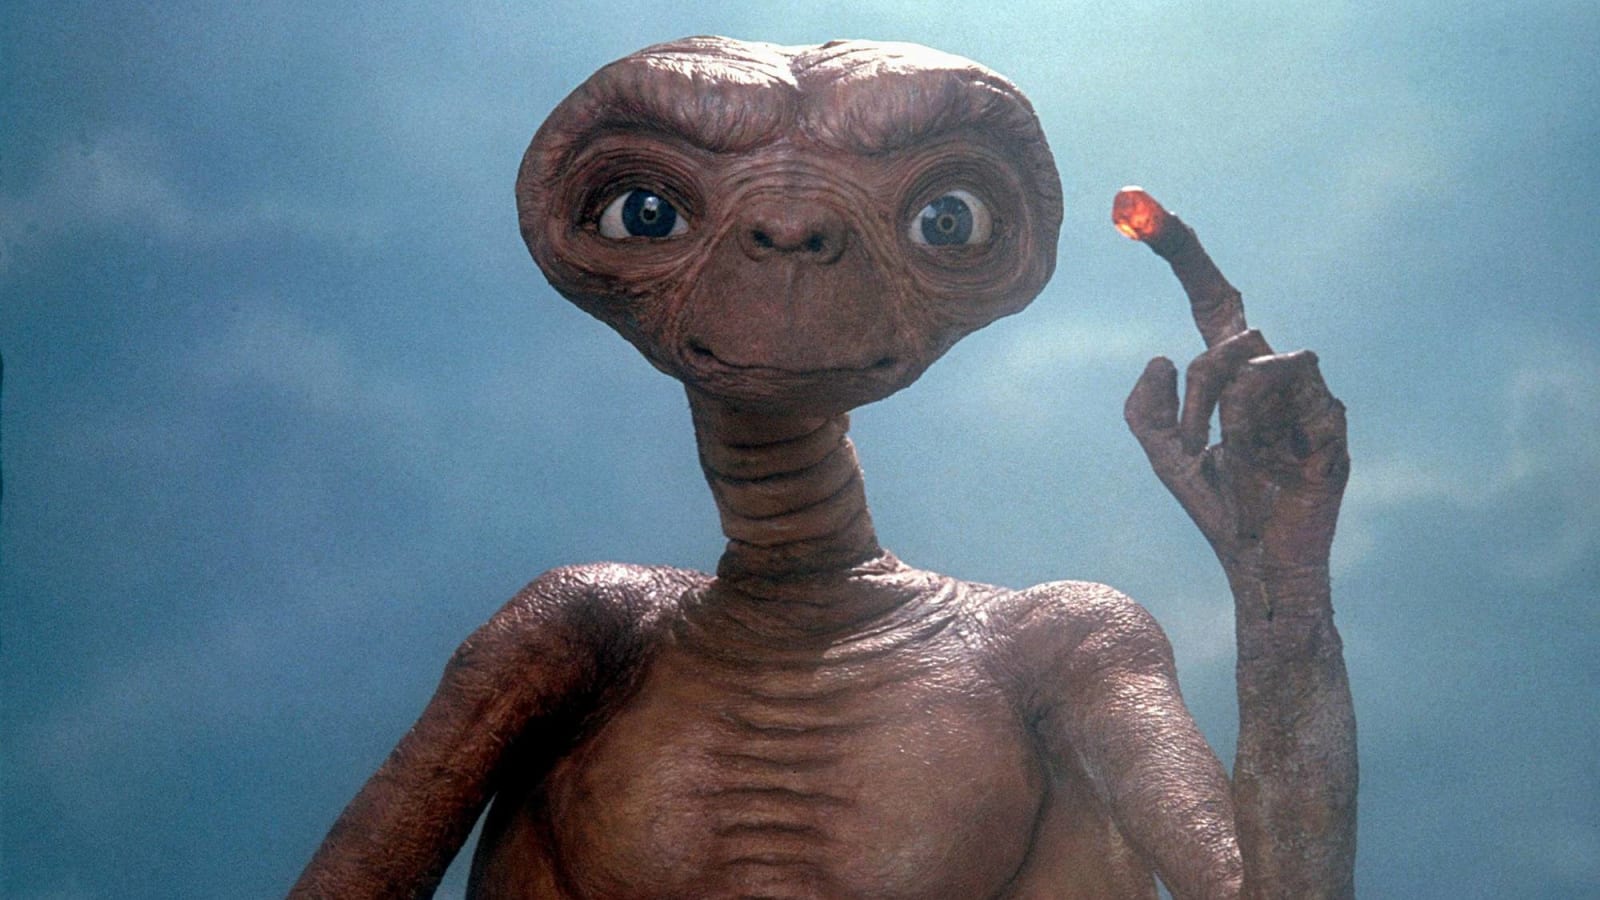 E.T Extra Terrestrial from Steven Spielberg's film